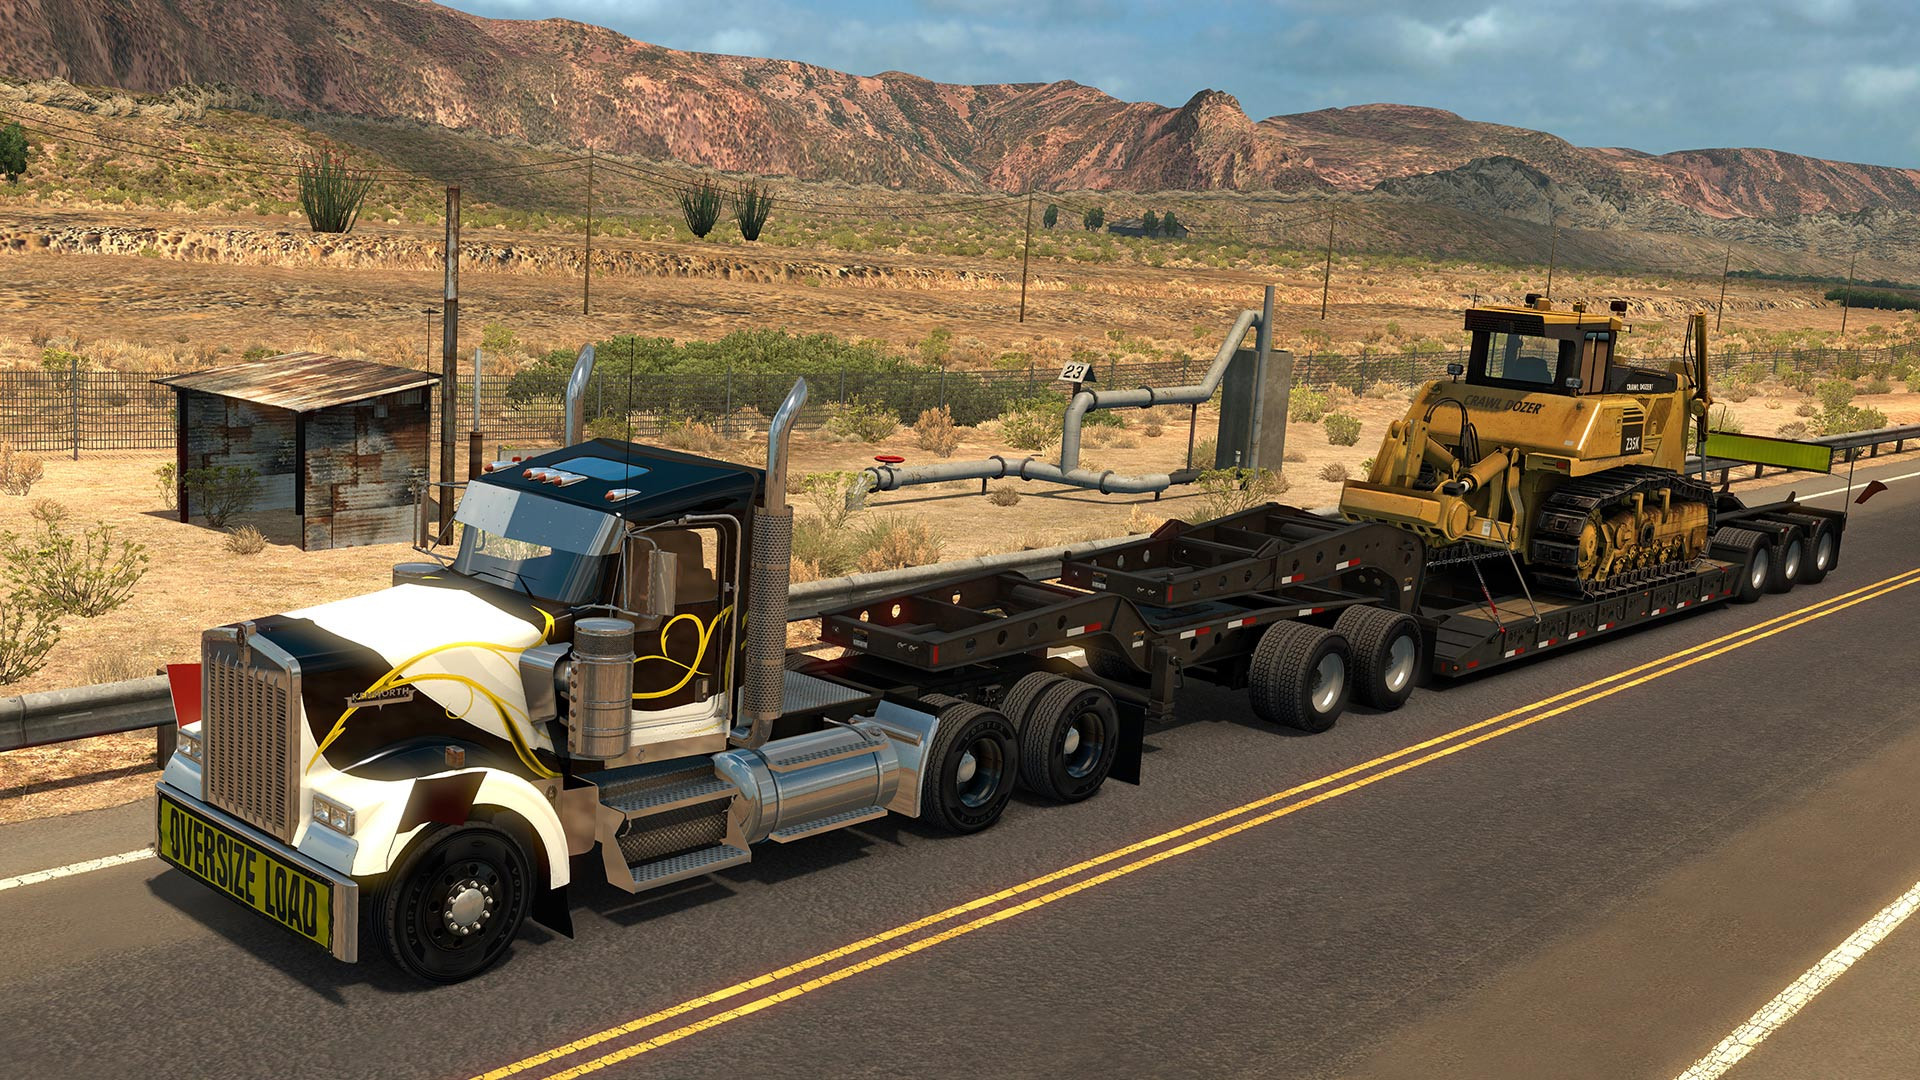 Атс перевозки. Американ трак симулятор 2. Дальнобойщики Американ трак. АТС Американ трак симулятор. American Truck Simulator - Heavy Cargo Pack.